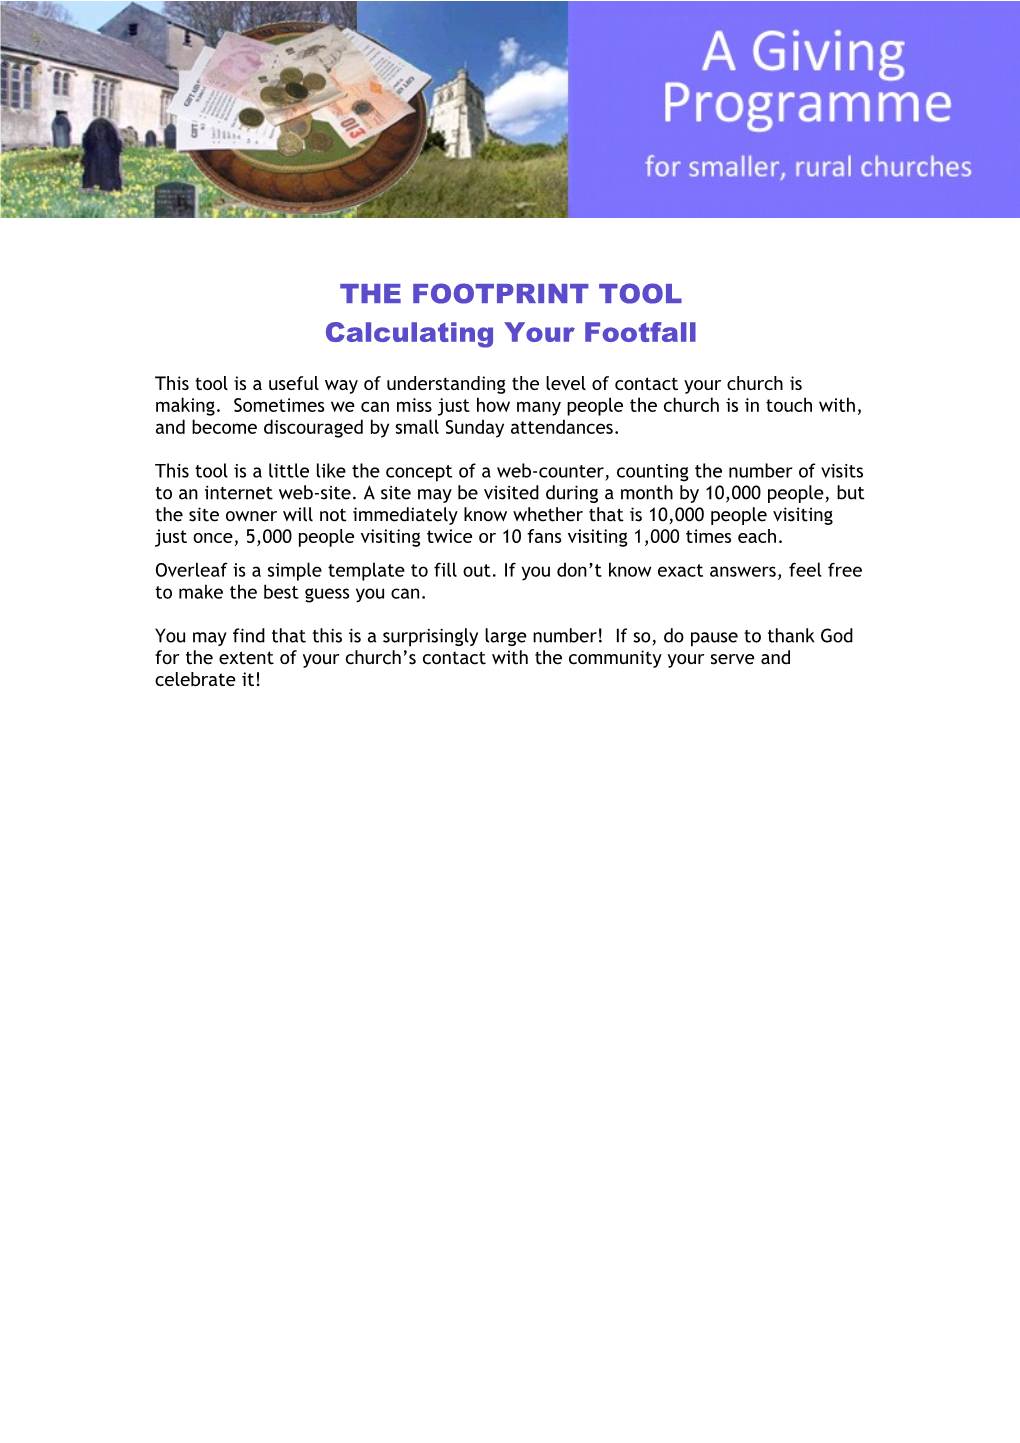 The Footprint Tool